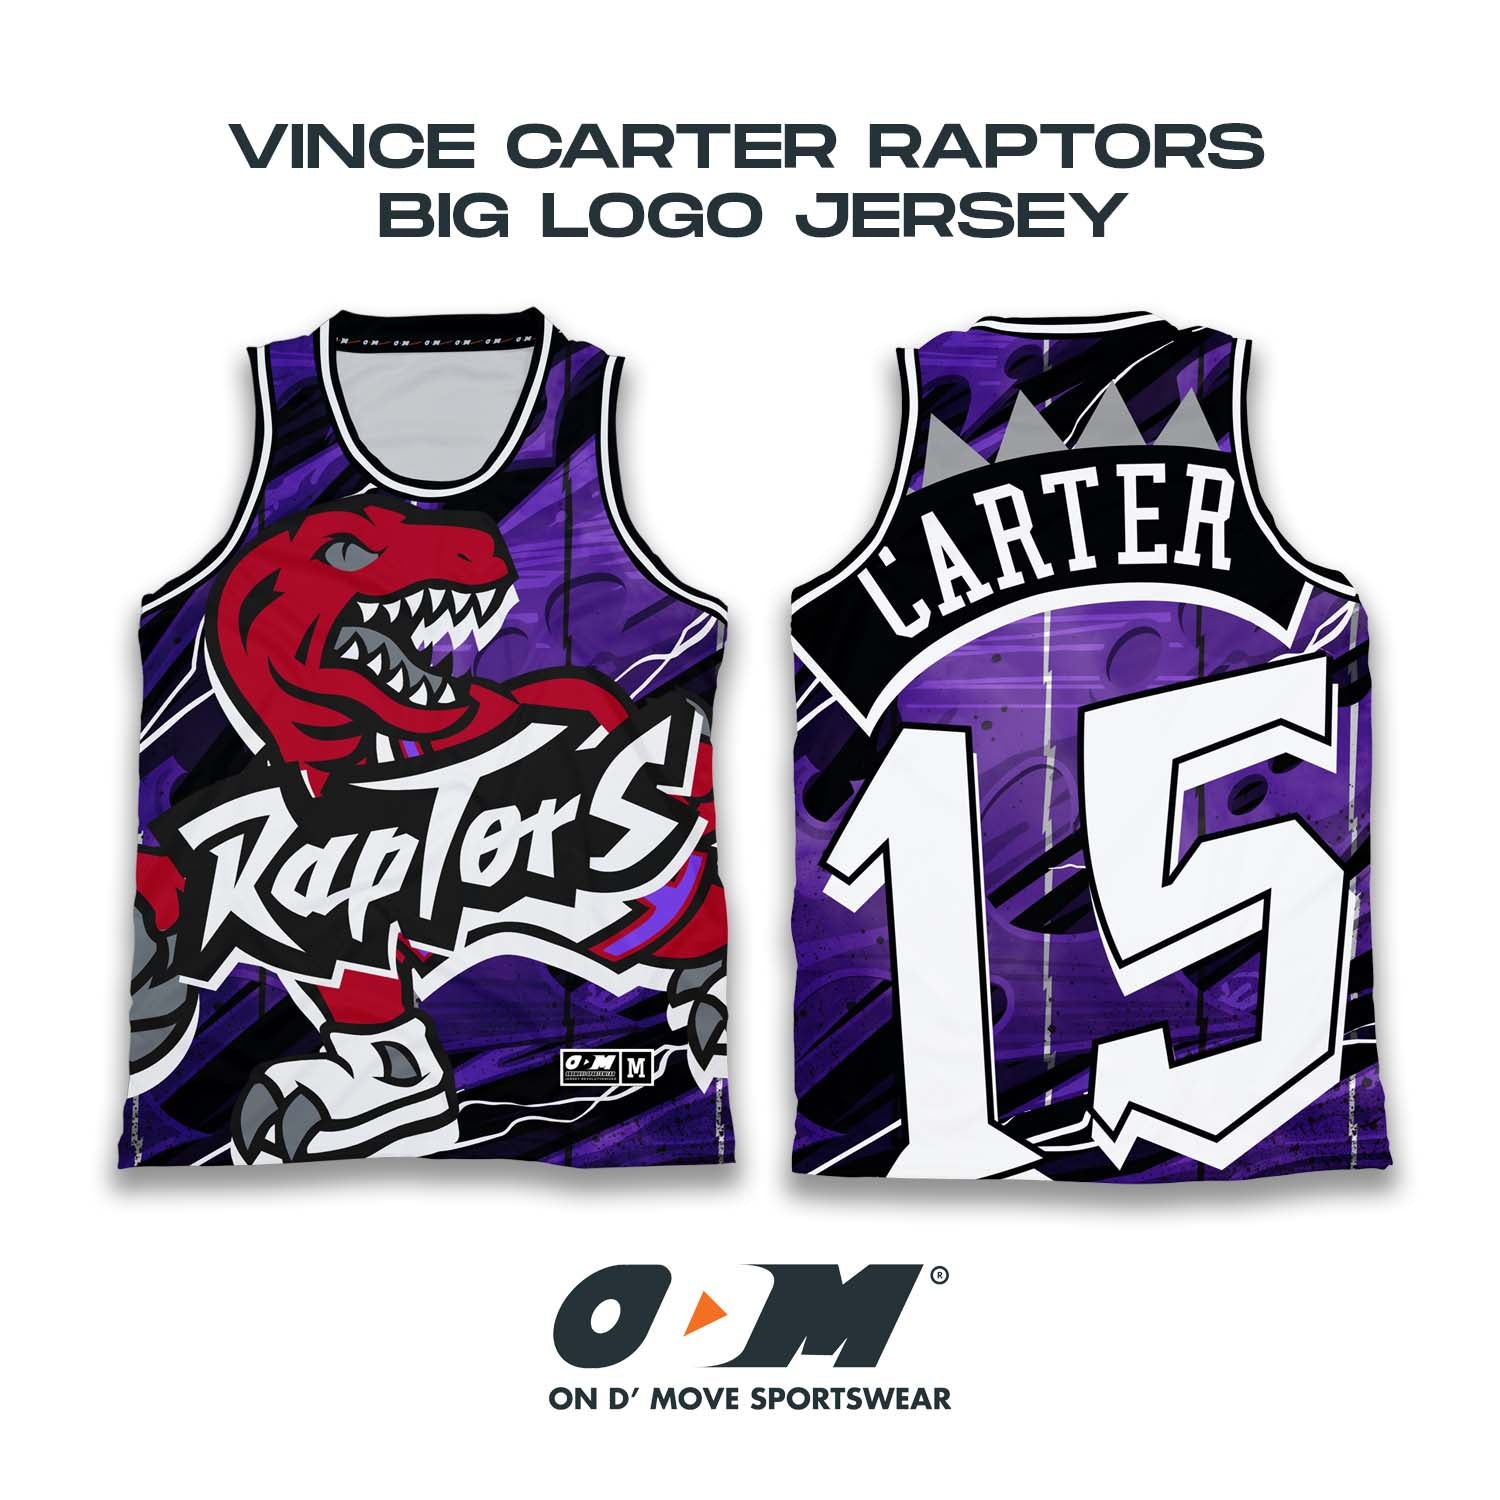 Vince Carter Raptors Big Logo Jersey